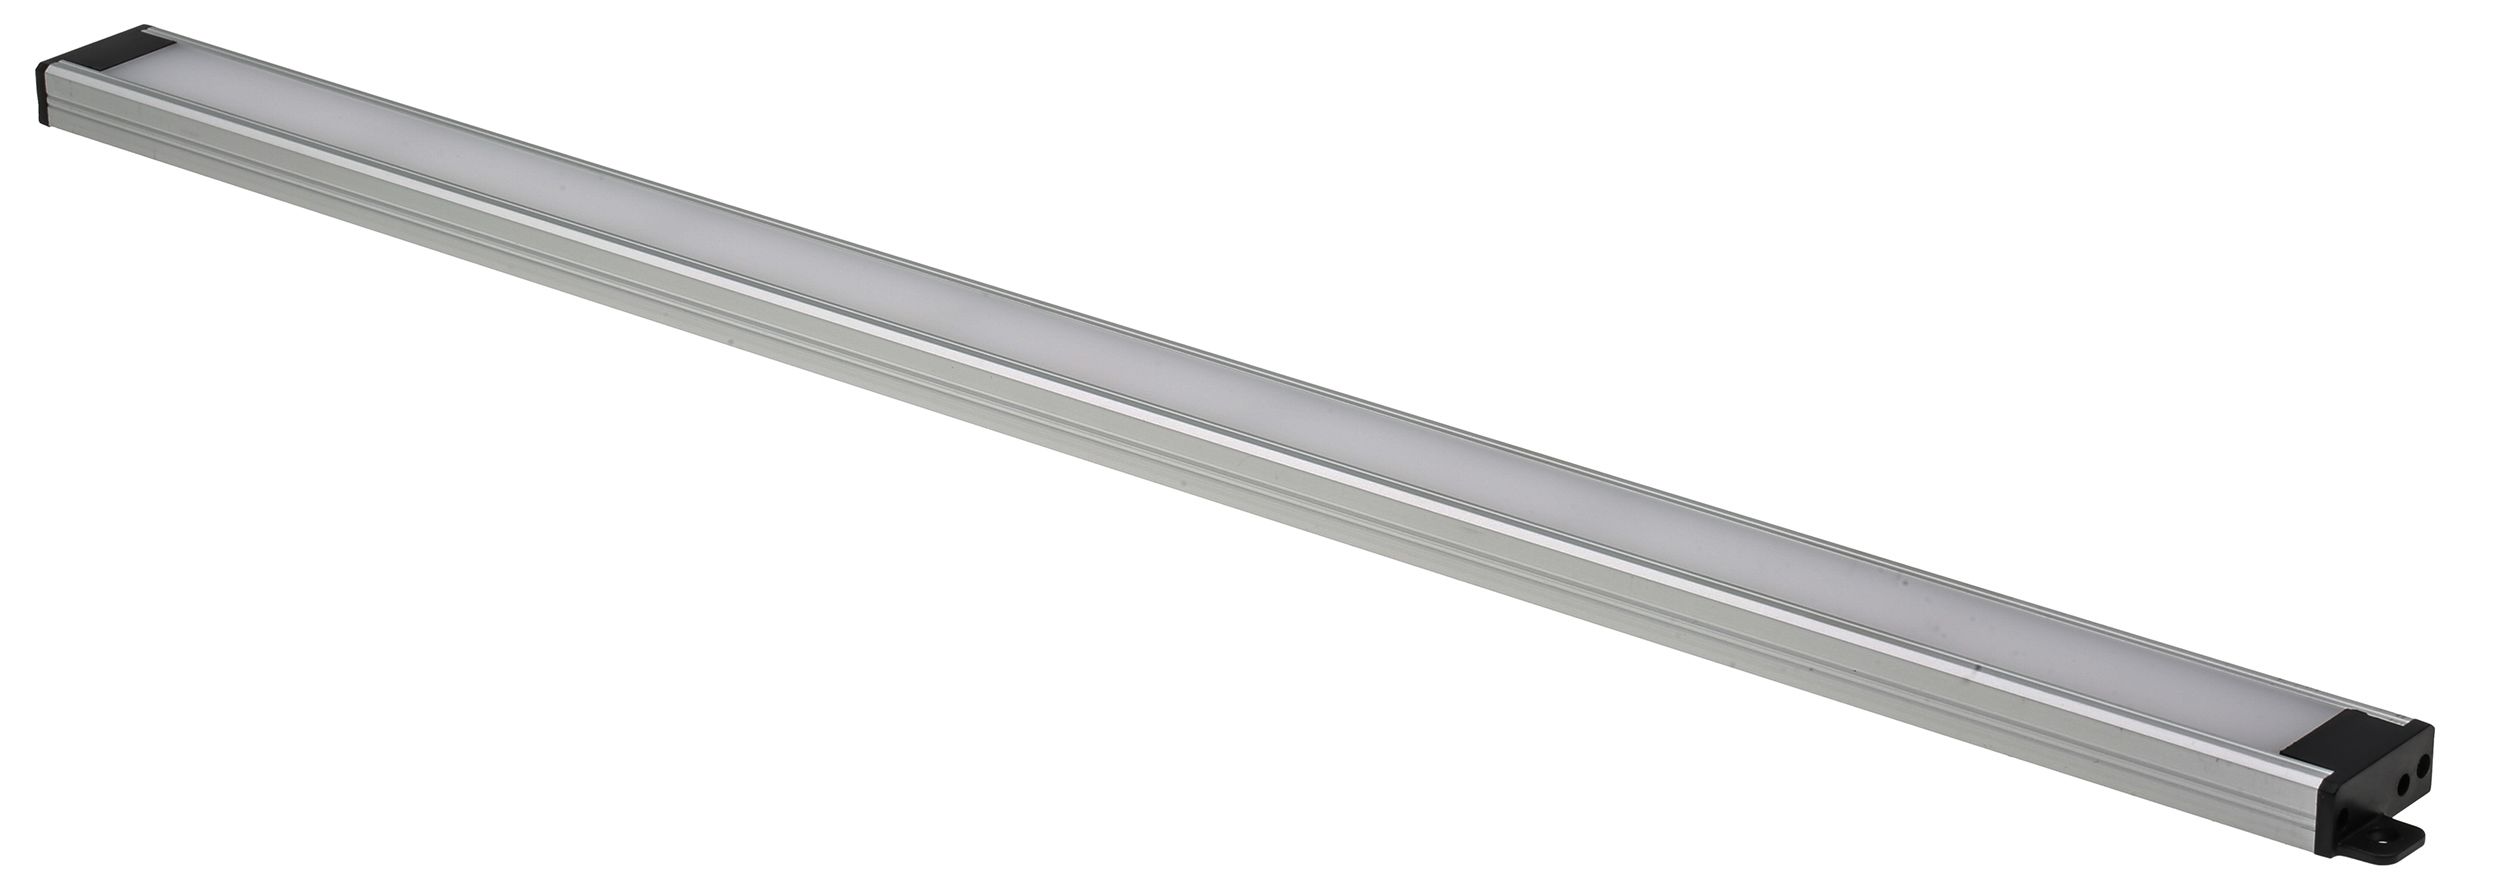 PowerLED CON510 LED 9 W Cabinet Light, 24 V dc, Cool White, 6000 → 6500K